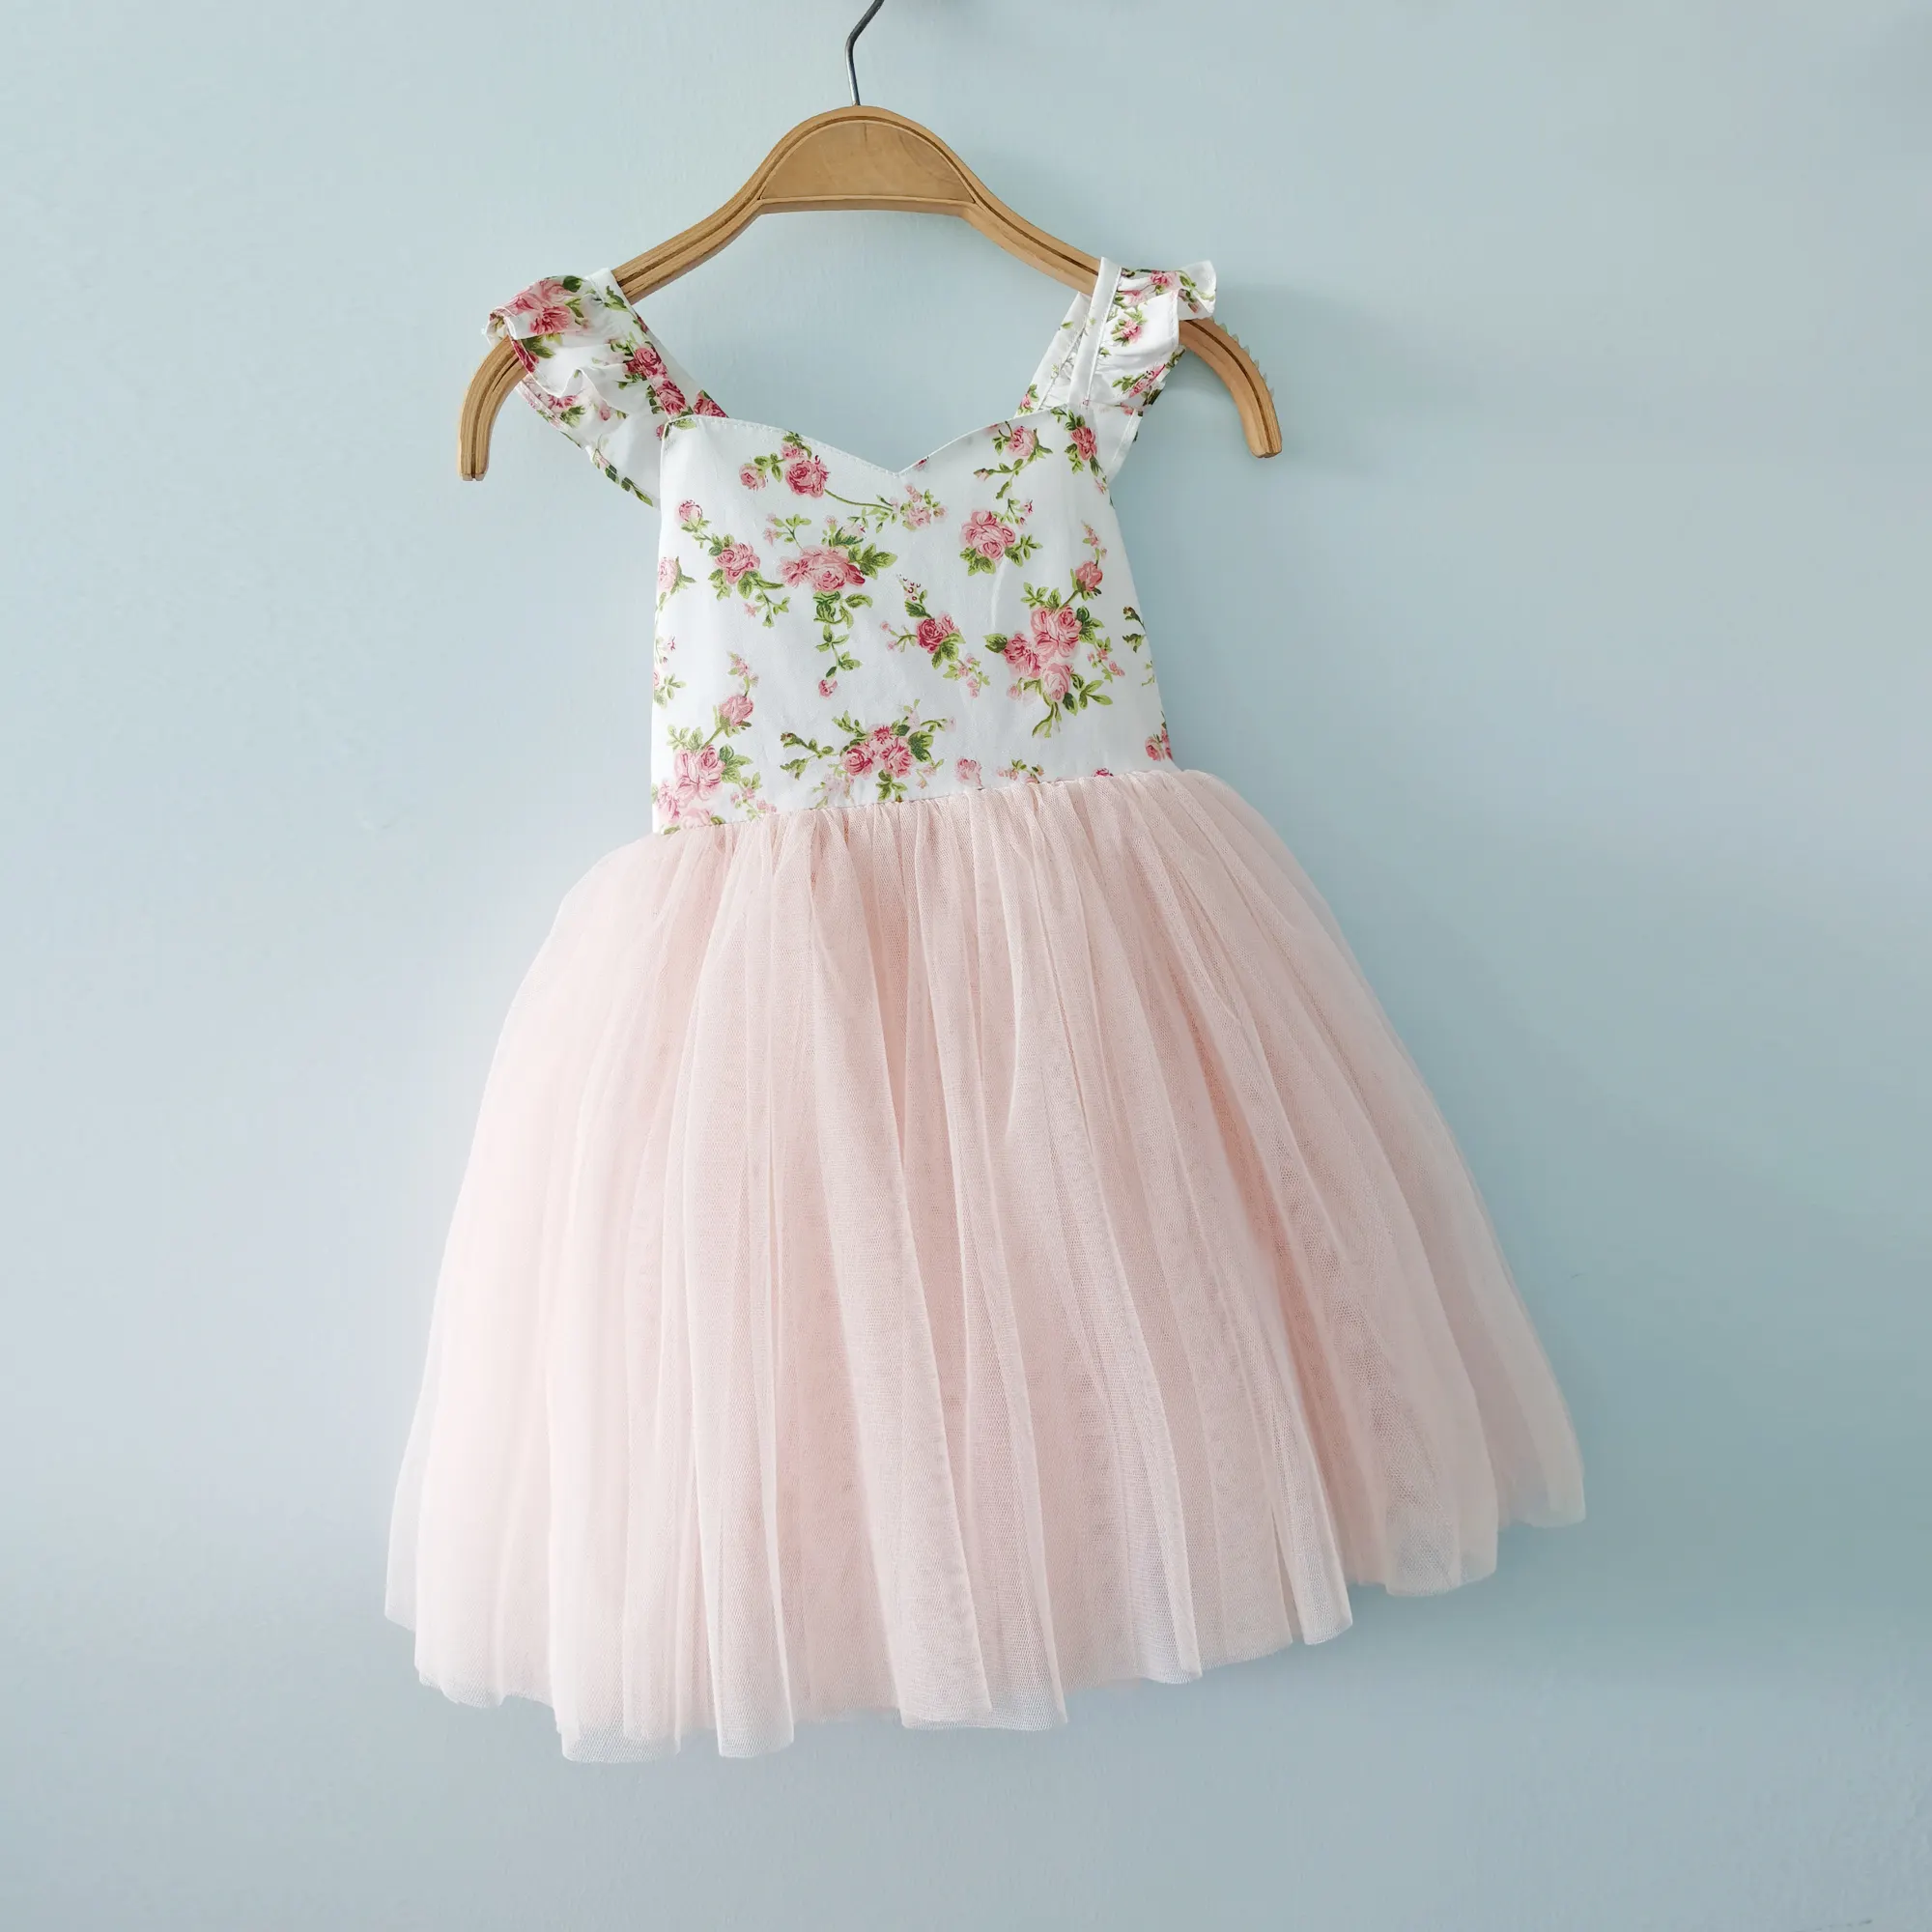 Flofallzique 2020 OEM Vintage Floral Pattern Petal Sleeve Girl Princess Dress For Christmas Party Wedding